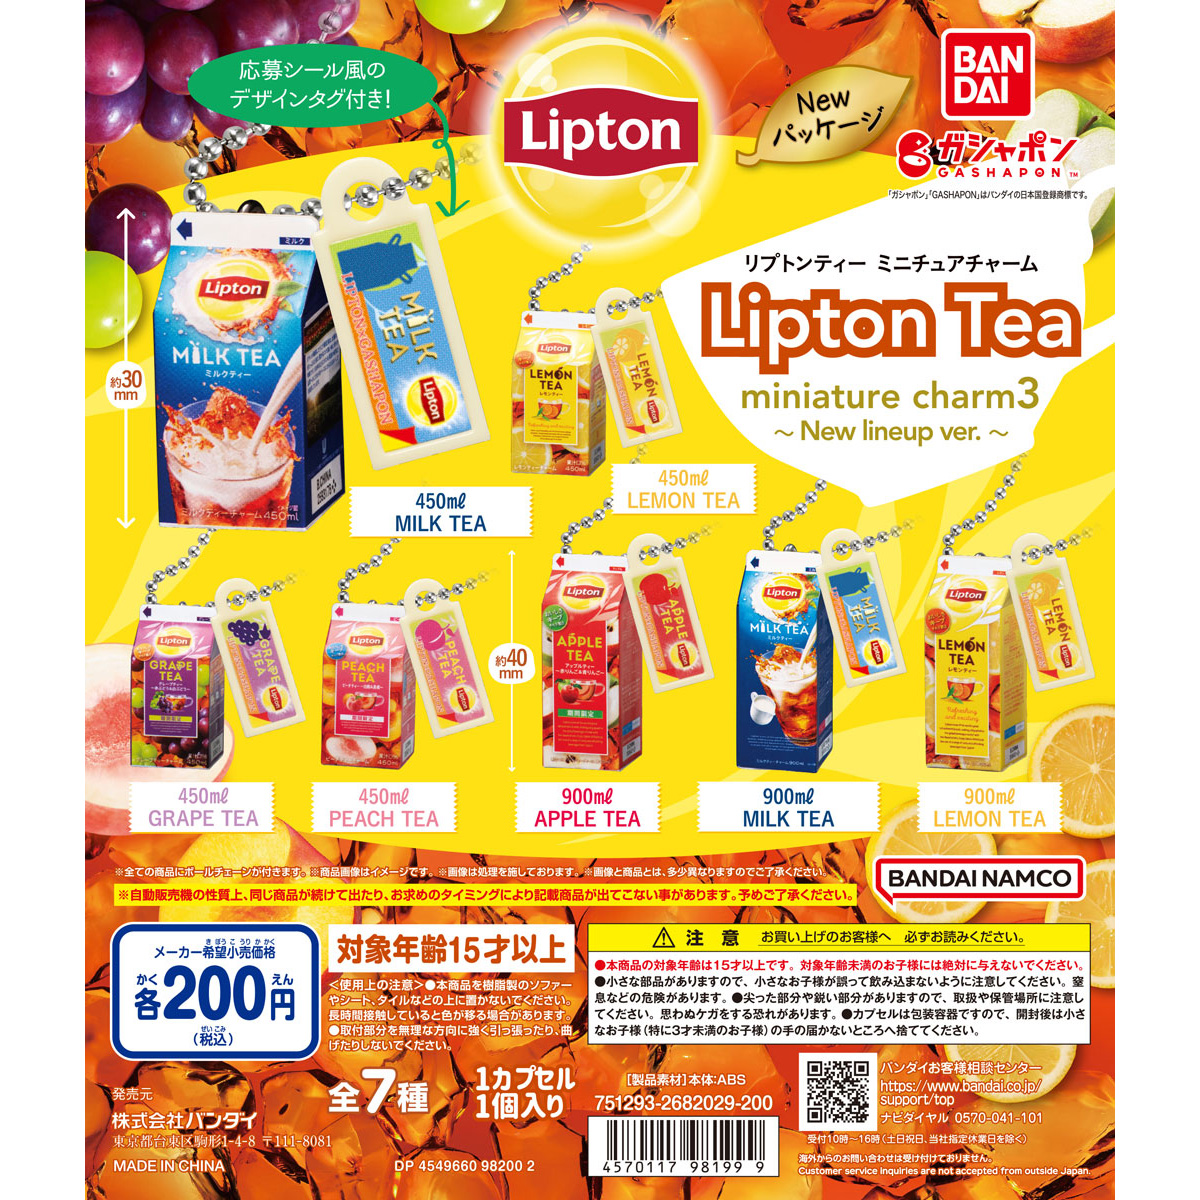 Lipton Tea miniature charm-リプトンティーミニチュアチャーム-３～New line up ver.～